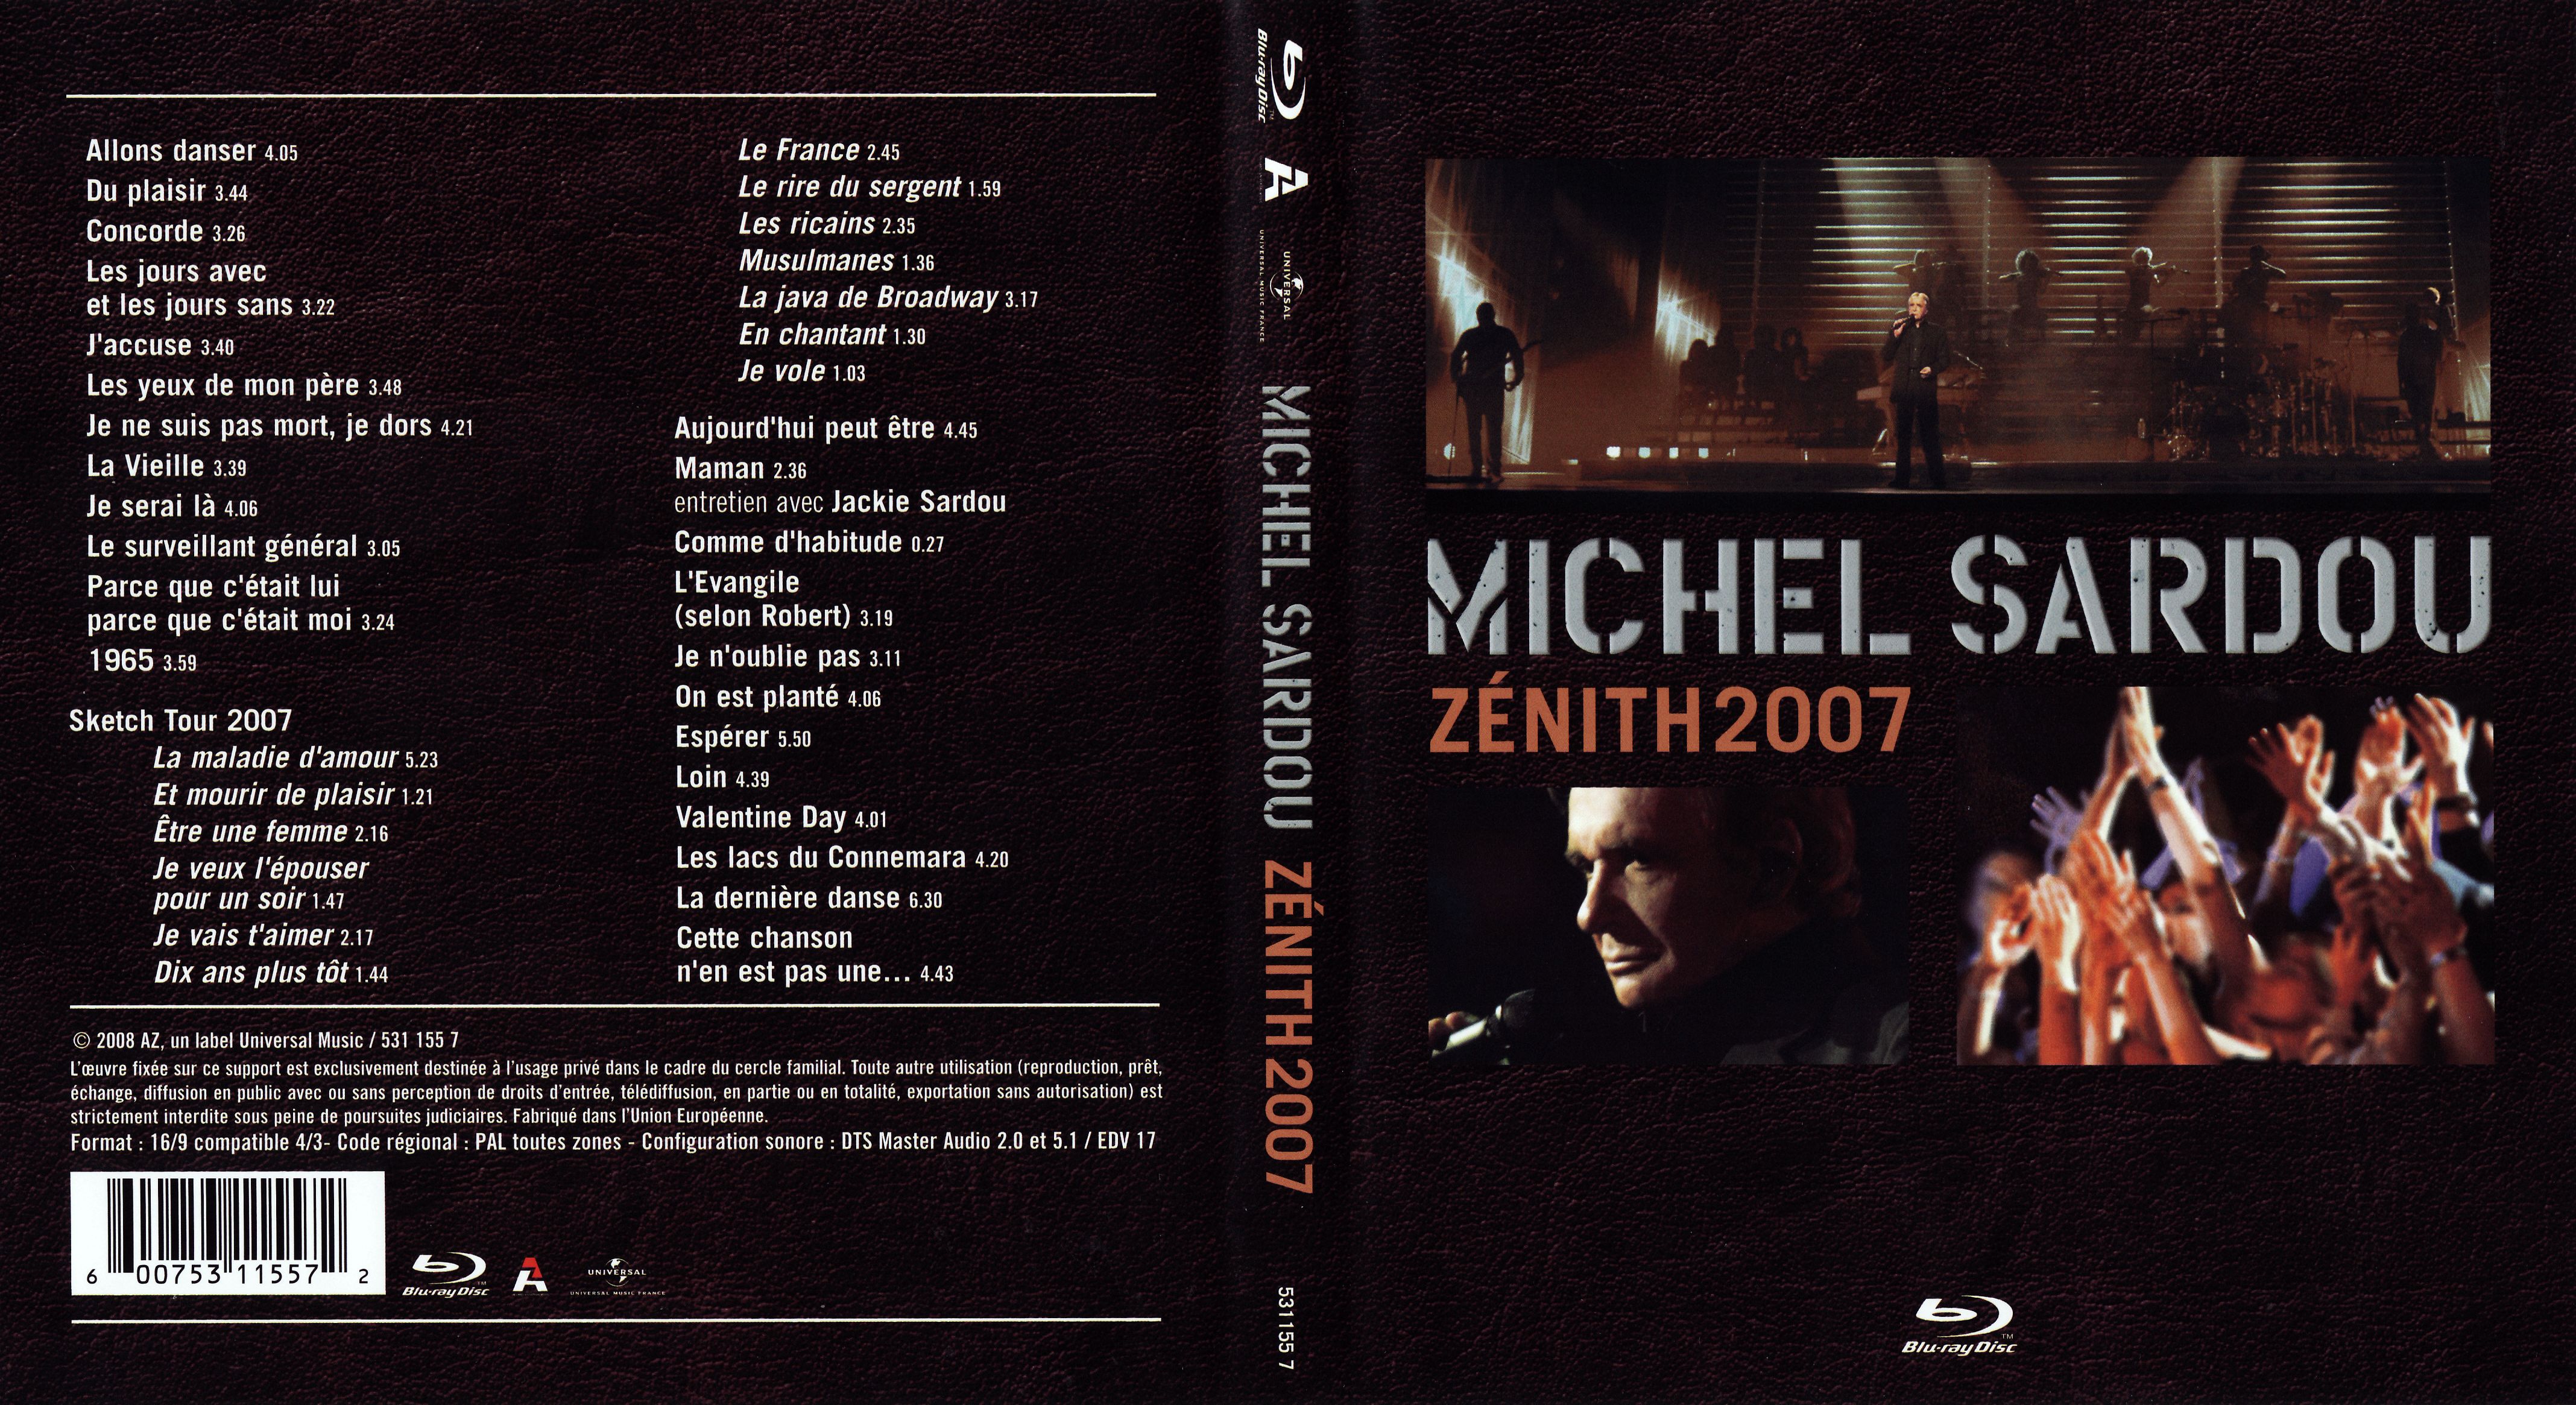 Jaquette DVD Michel Sardou Zenith 2007 (BLU-RAY)